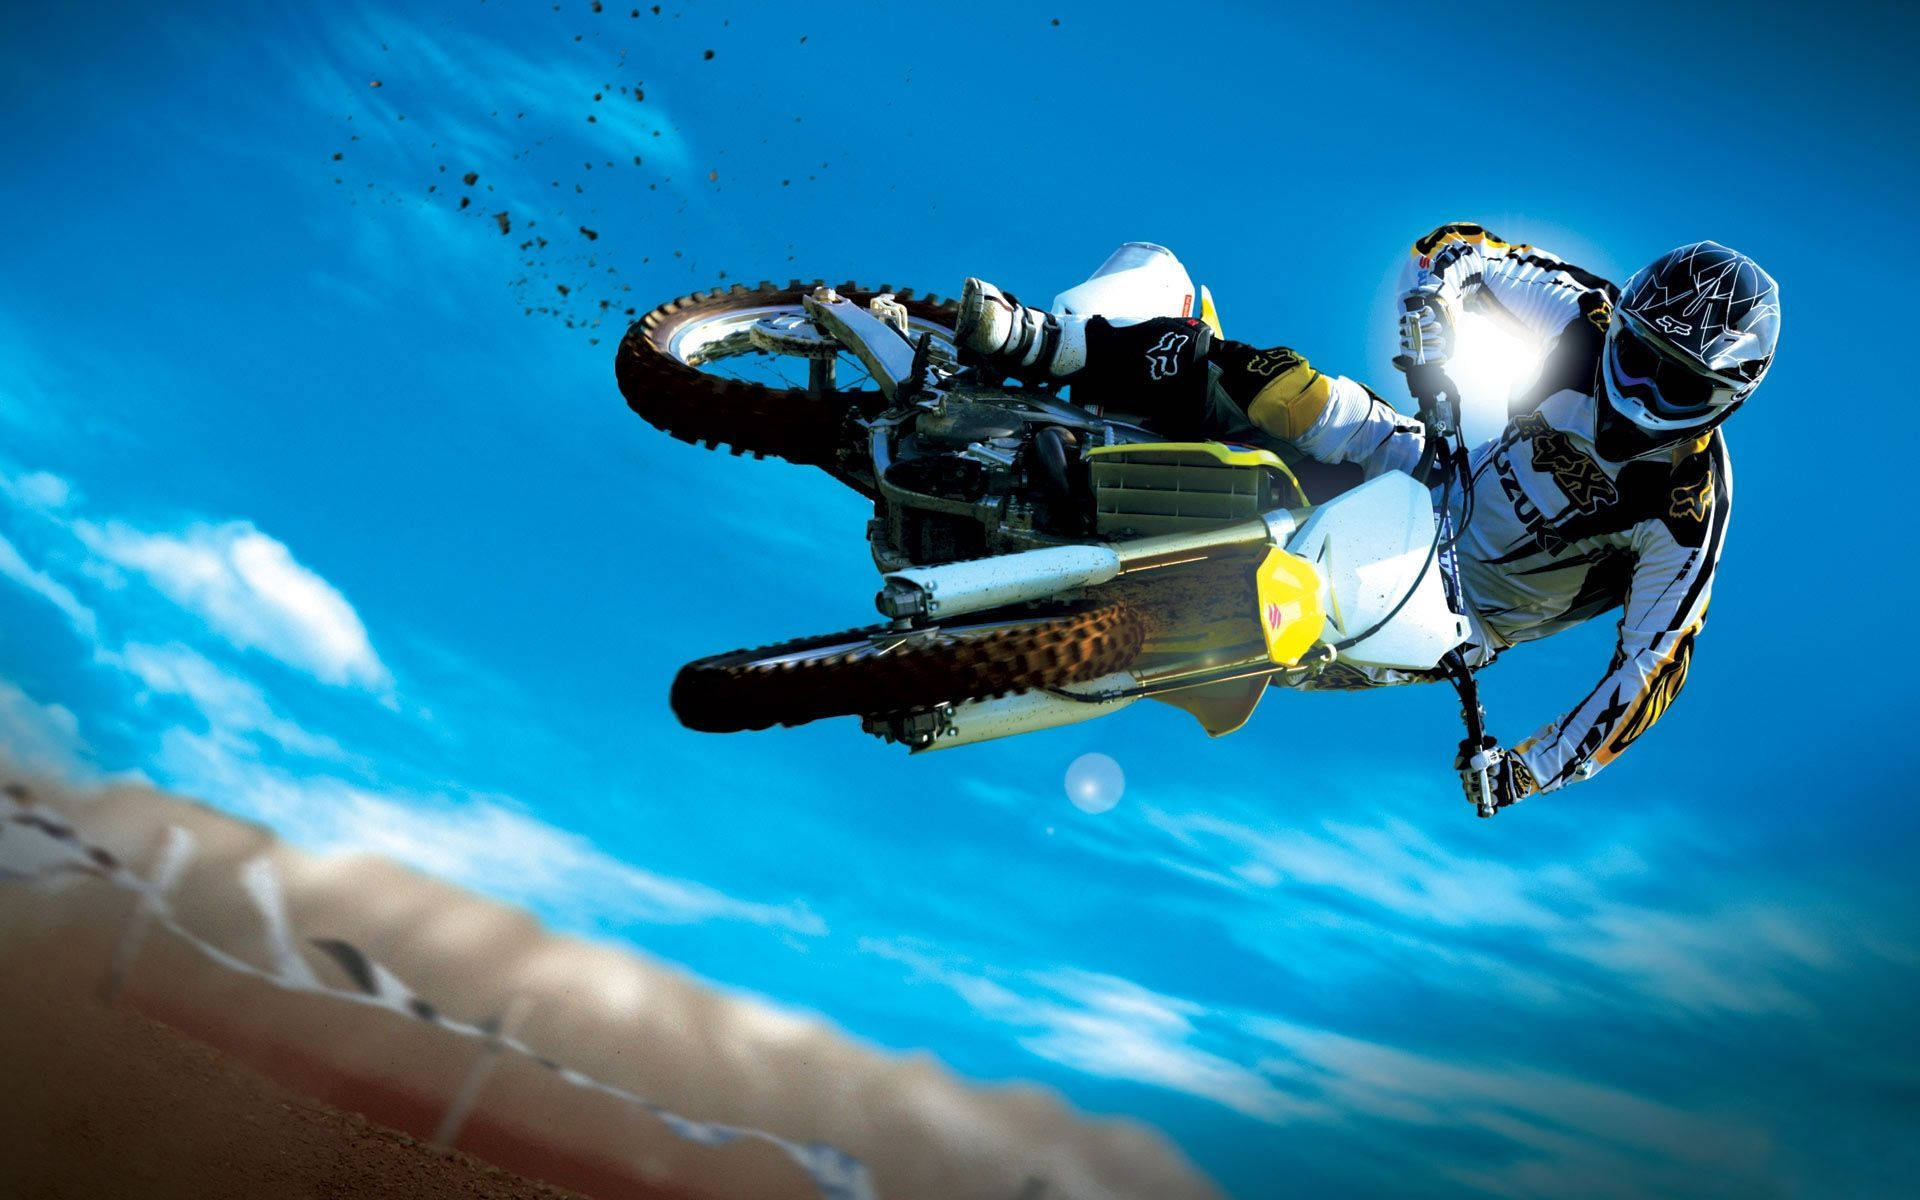 Motocross Sports Driver Realistic Illustration